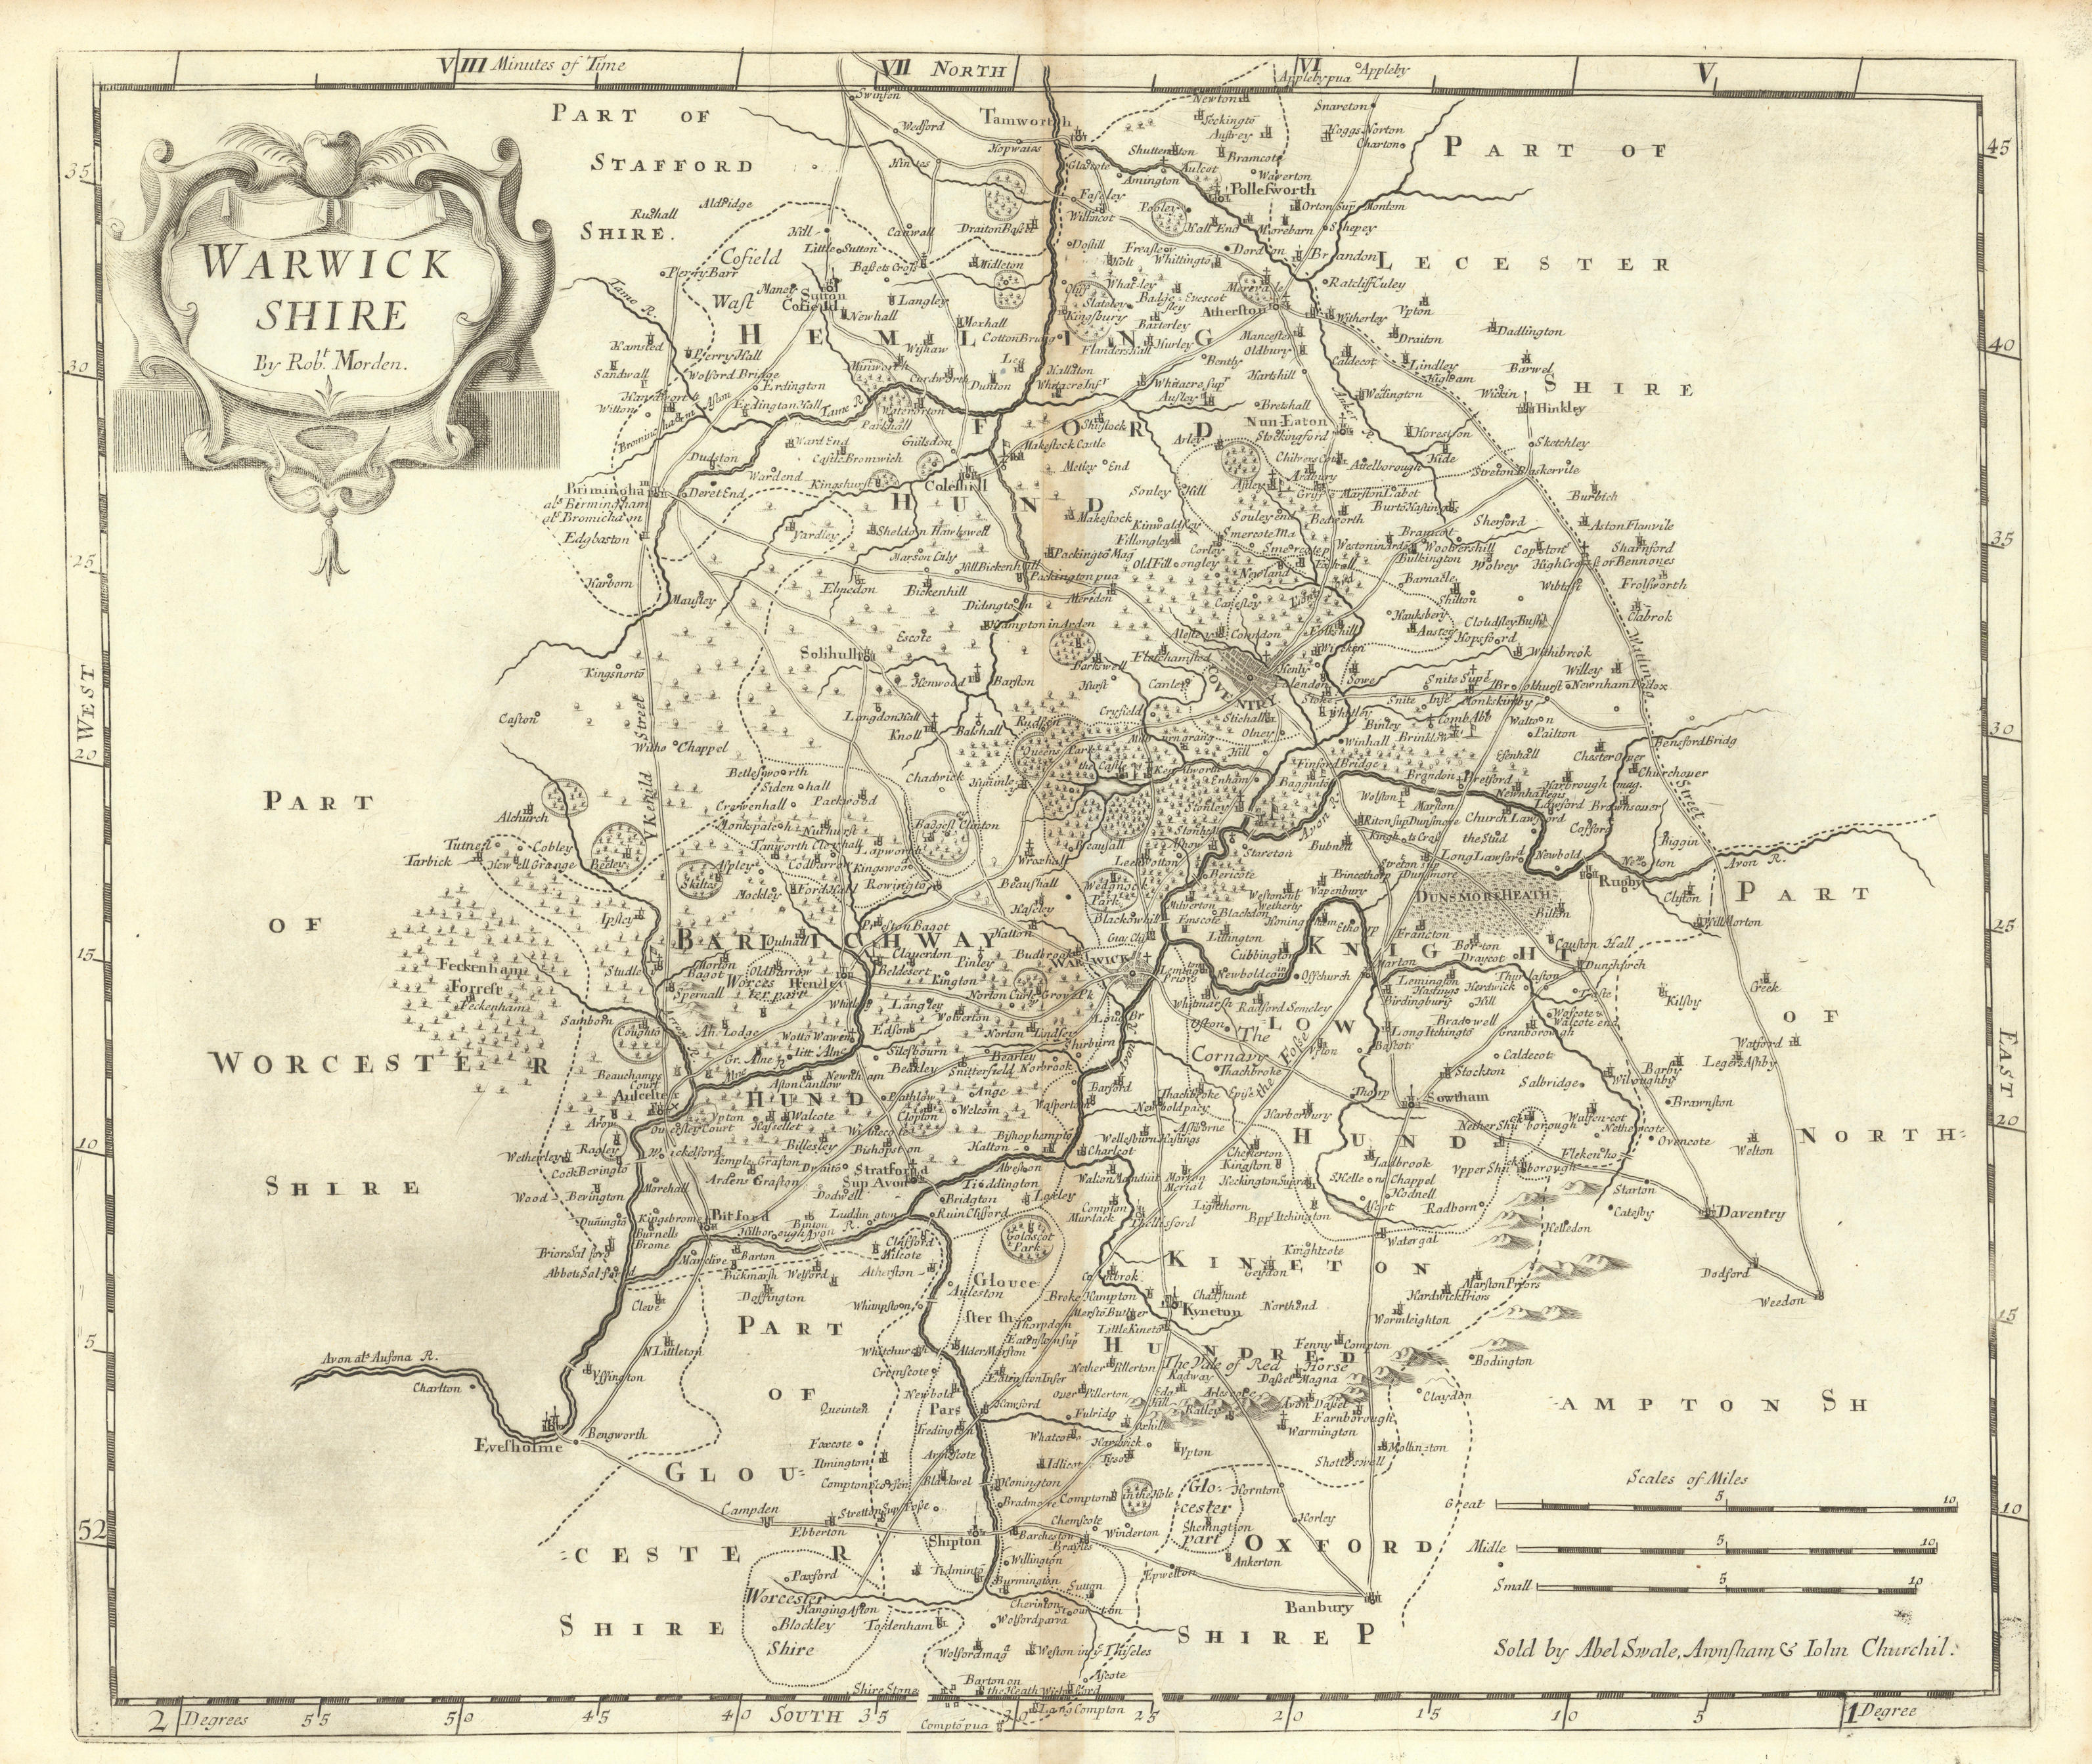 Warwickshire. 'WARWICK SHIRE' by ROBERT MORDEN from Camden's Britannia 1695 map